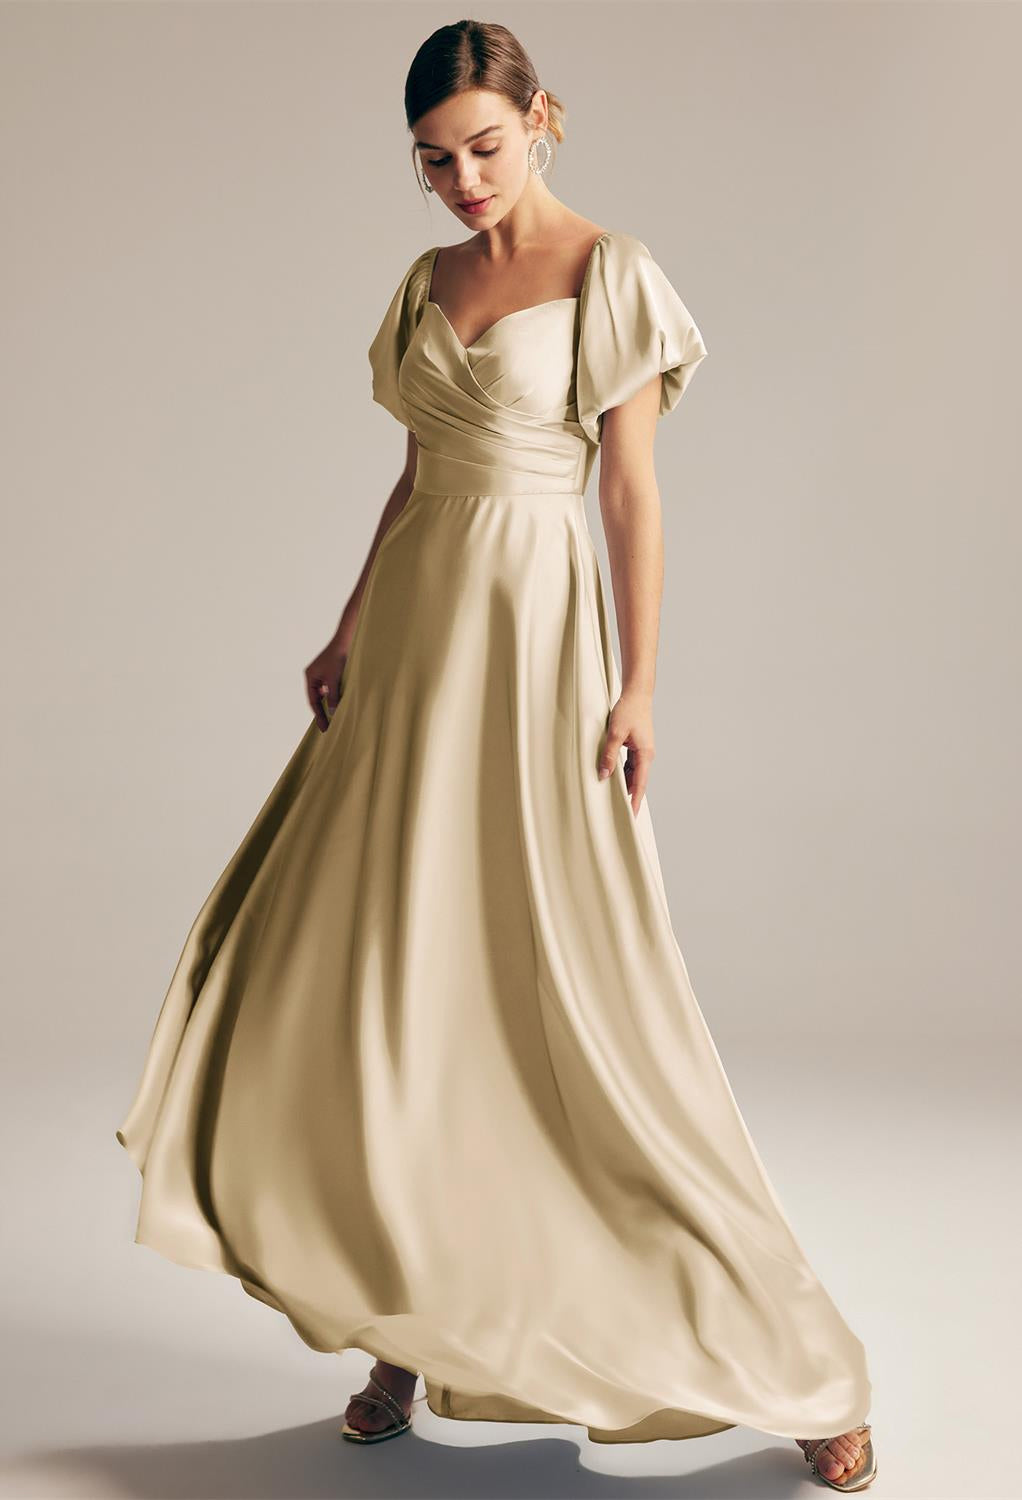 Dey - Satin Charmeuse Bridesmaid Dress